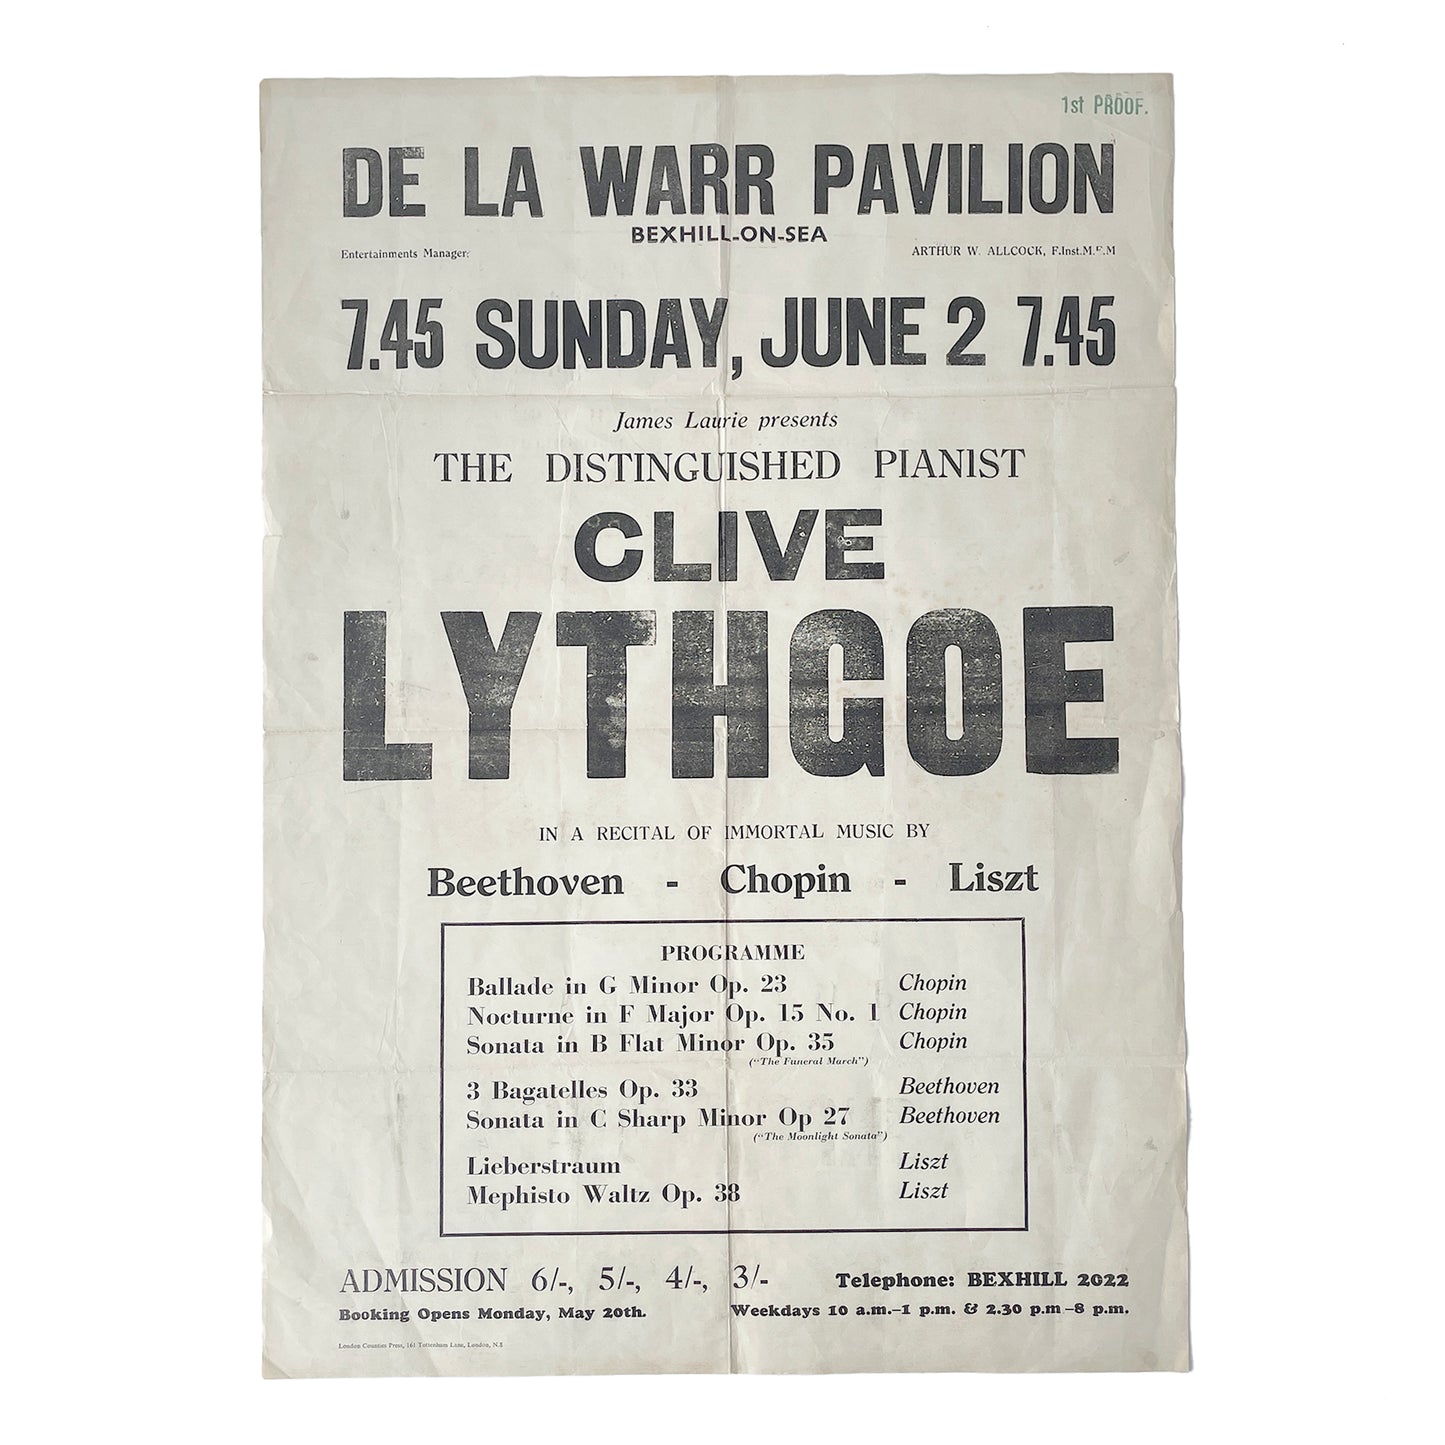 Original Letterpress Printed Poster – Clive Lythgoe Circa 1960s